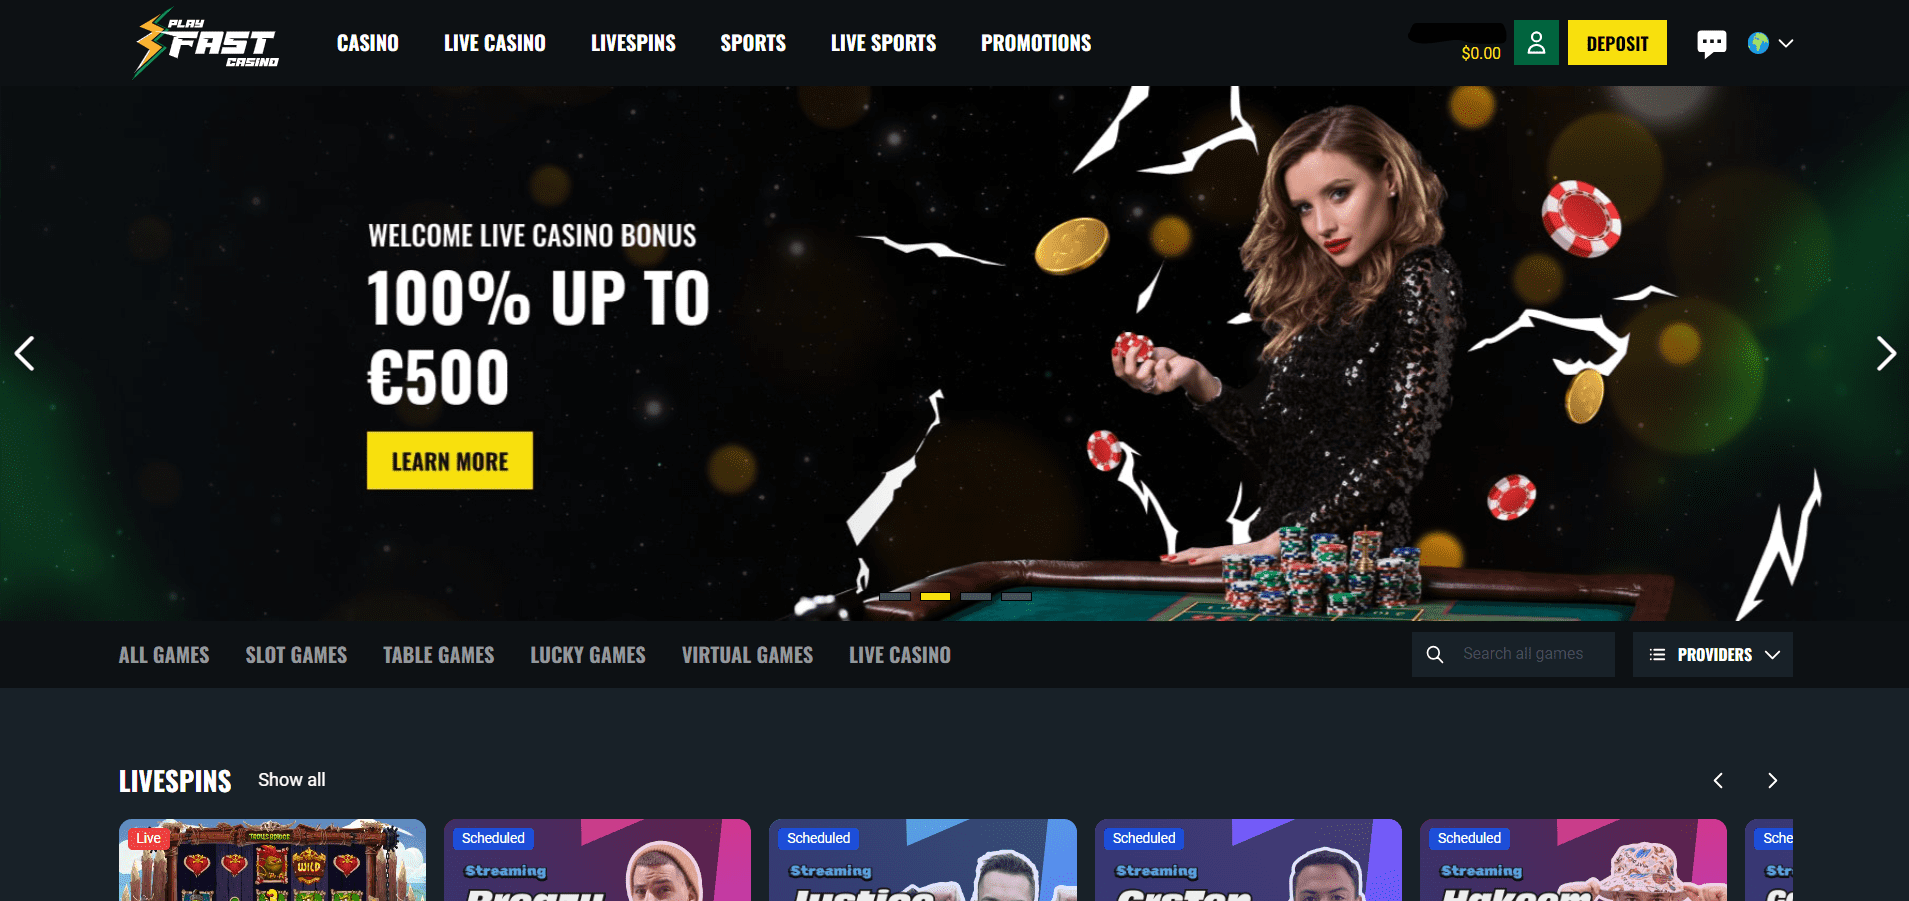 Screenshot of Play Fast casinos landing page